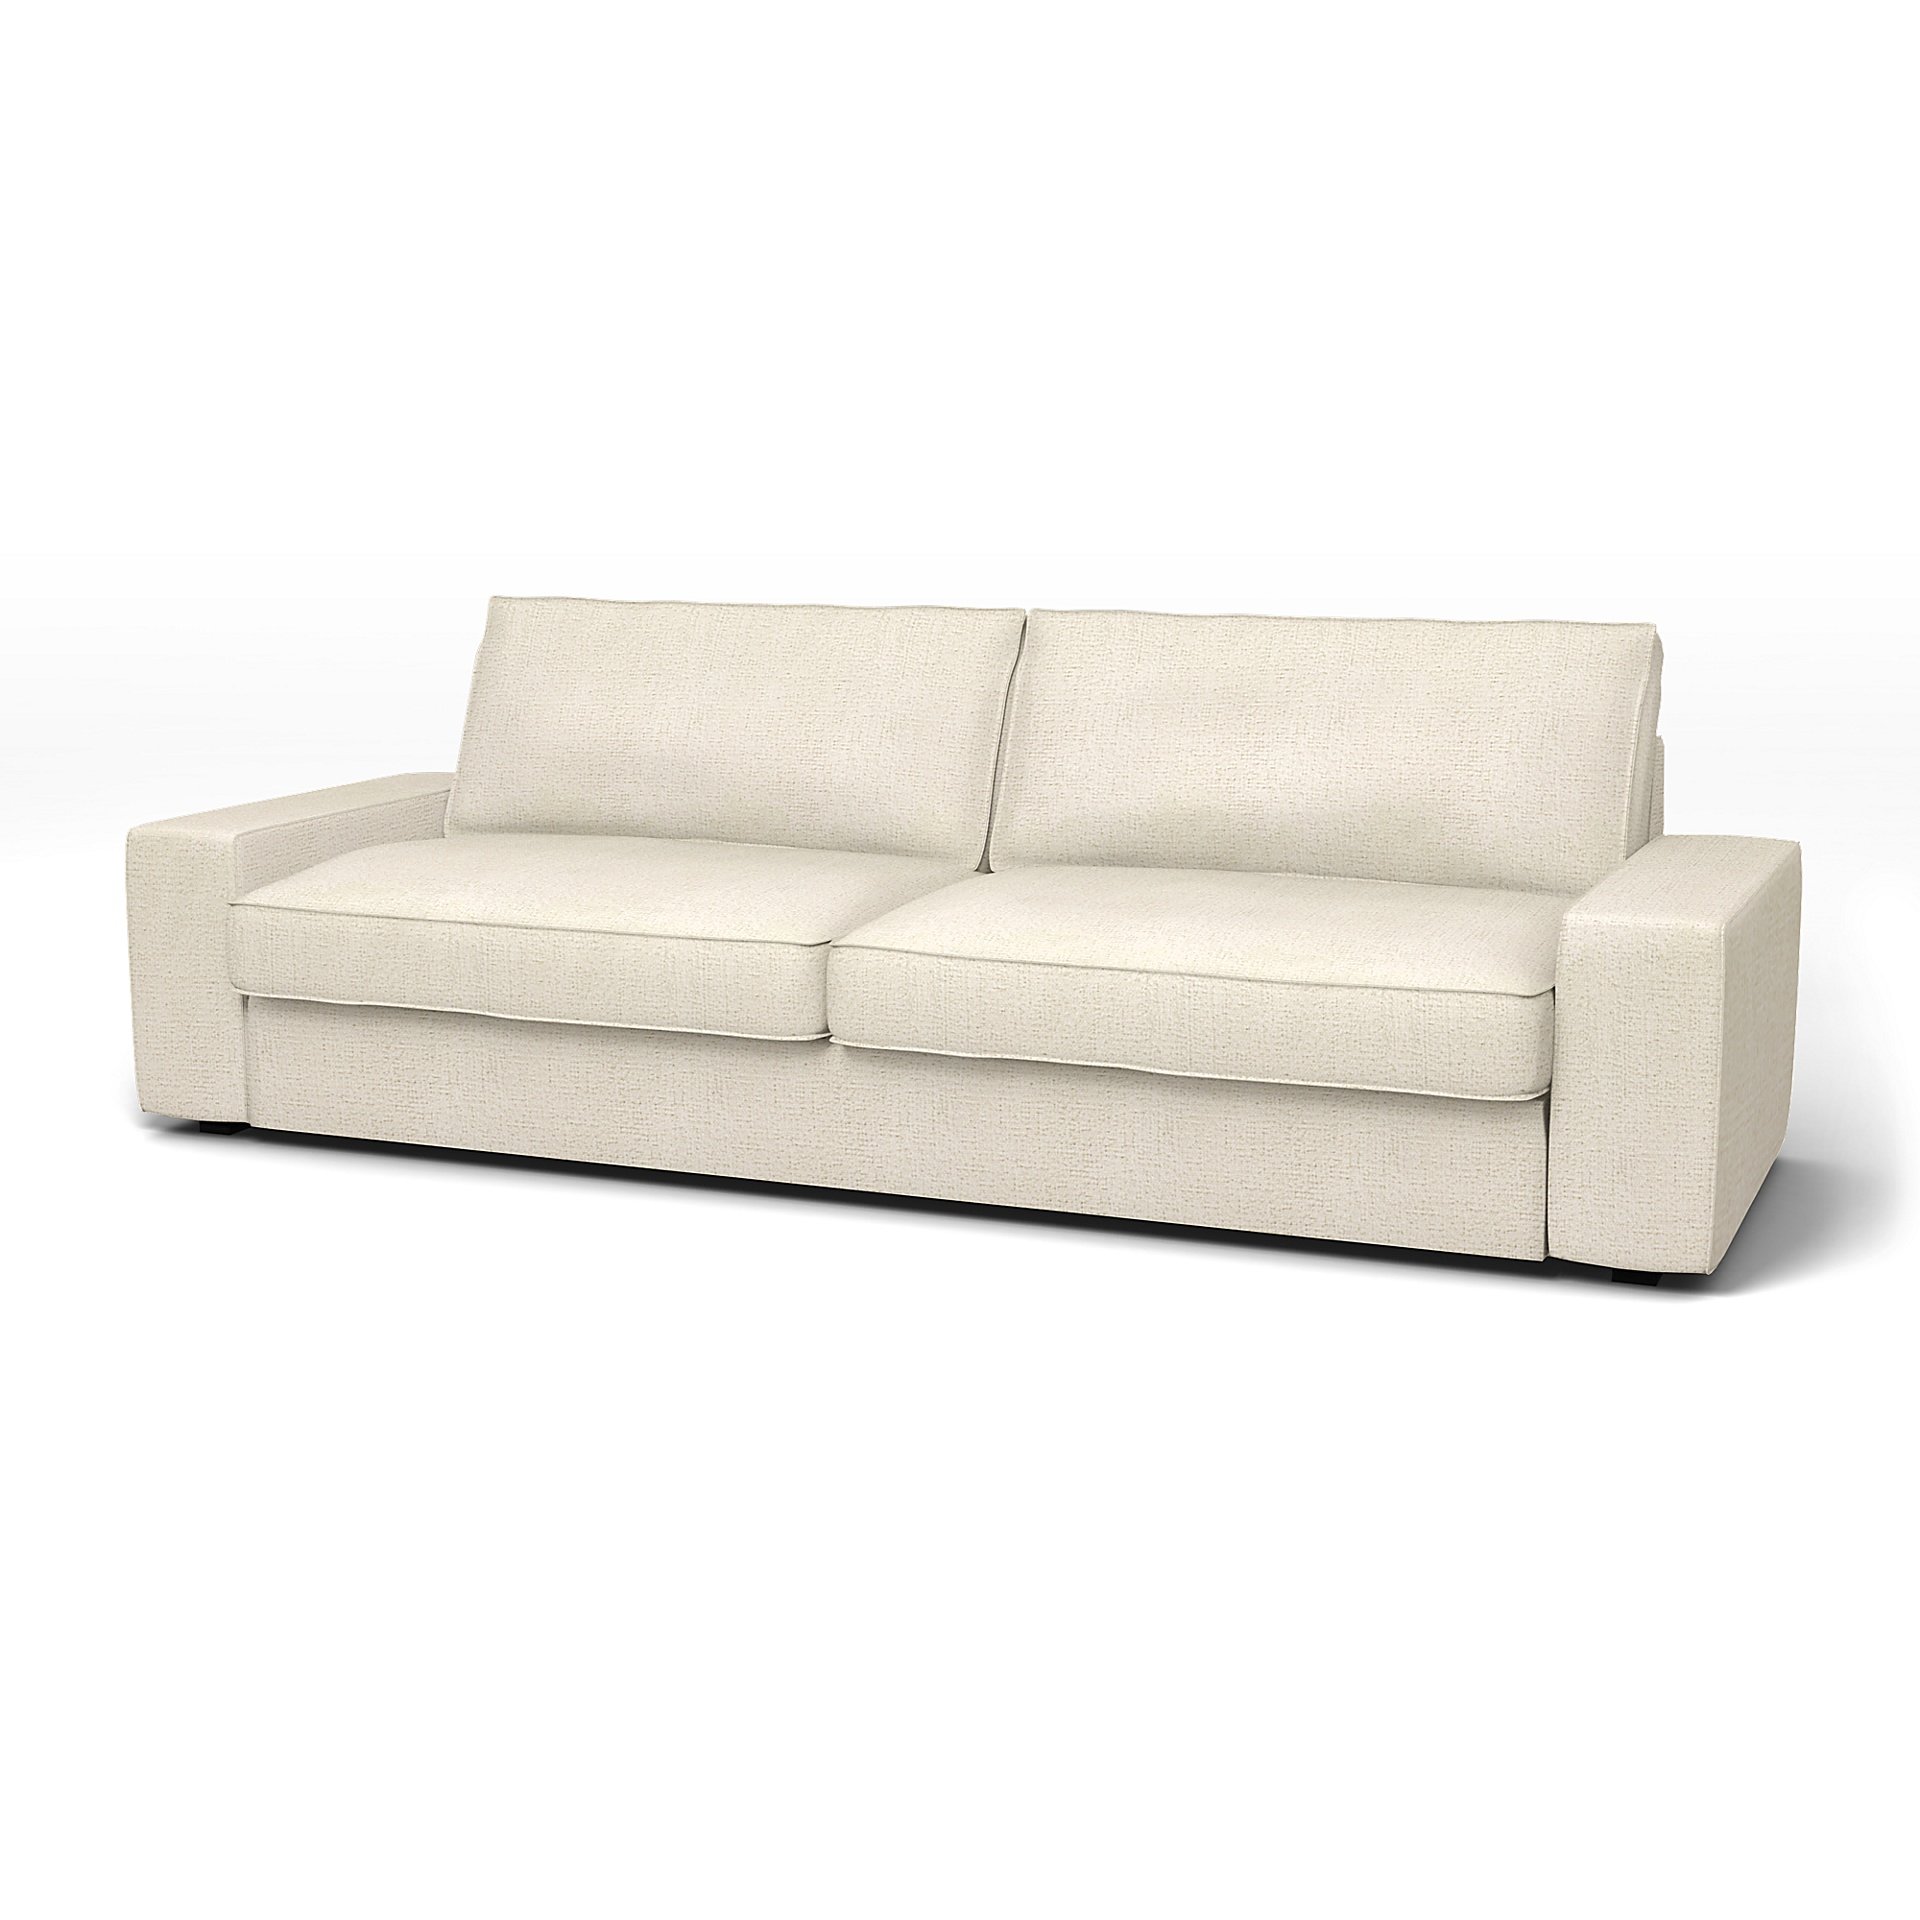 IKEA - Kivik Sofa Bed Cover, Ecru, Boucle & Texture - Bemz